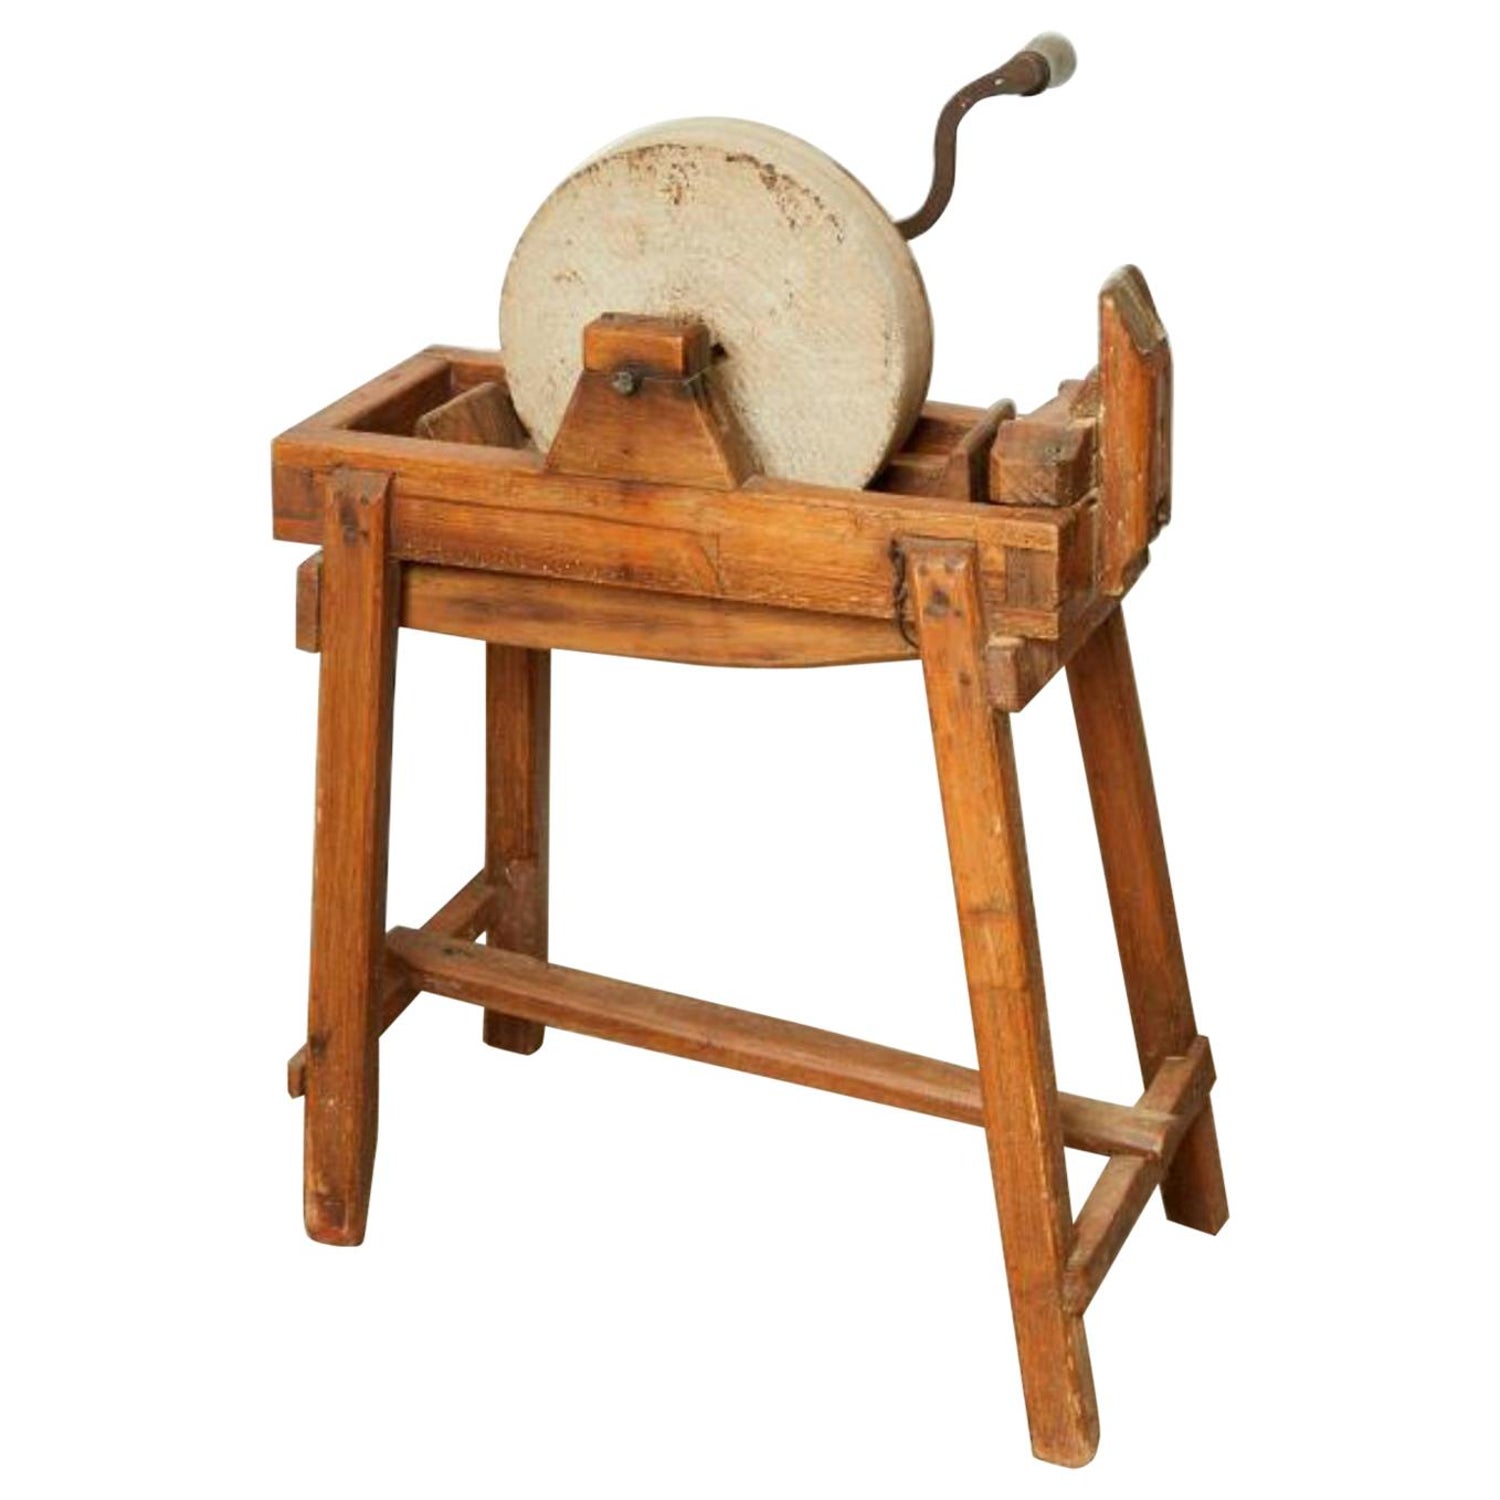 https://a.1stdibscdn.com/antique-sharpening-wheel-standing-on-wood-base-france-circa-1900-for-sale/1121189/f_107204211534174266557/10720421_master.jpg?width=1500